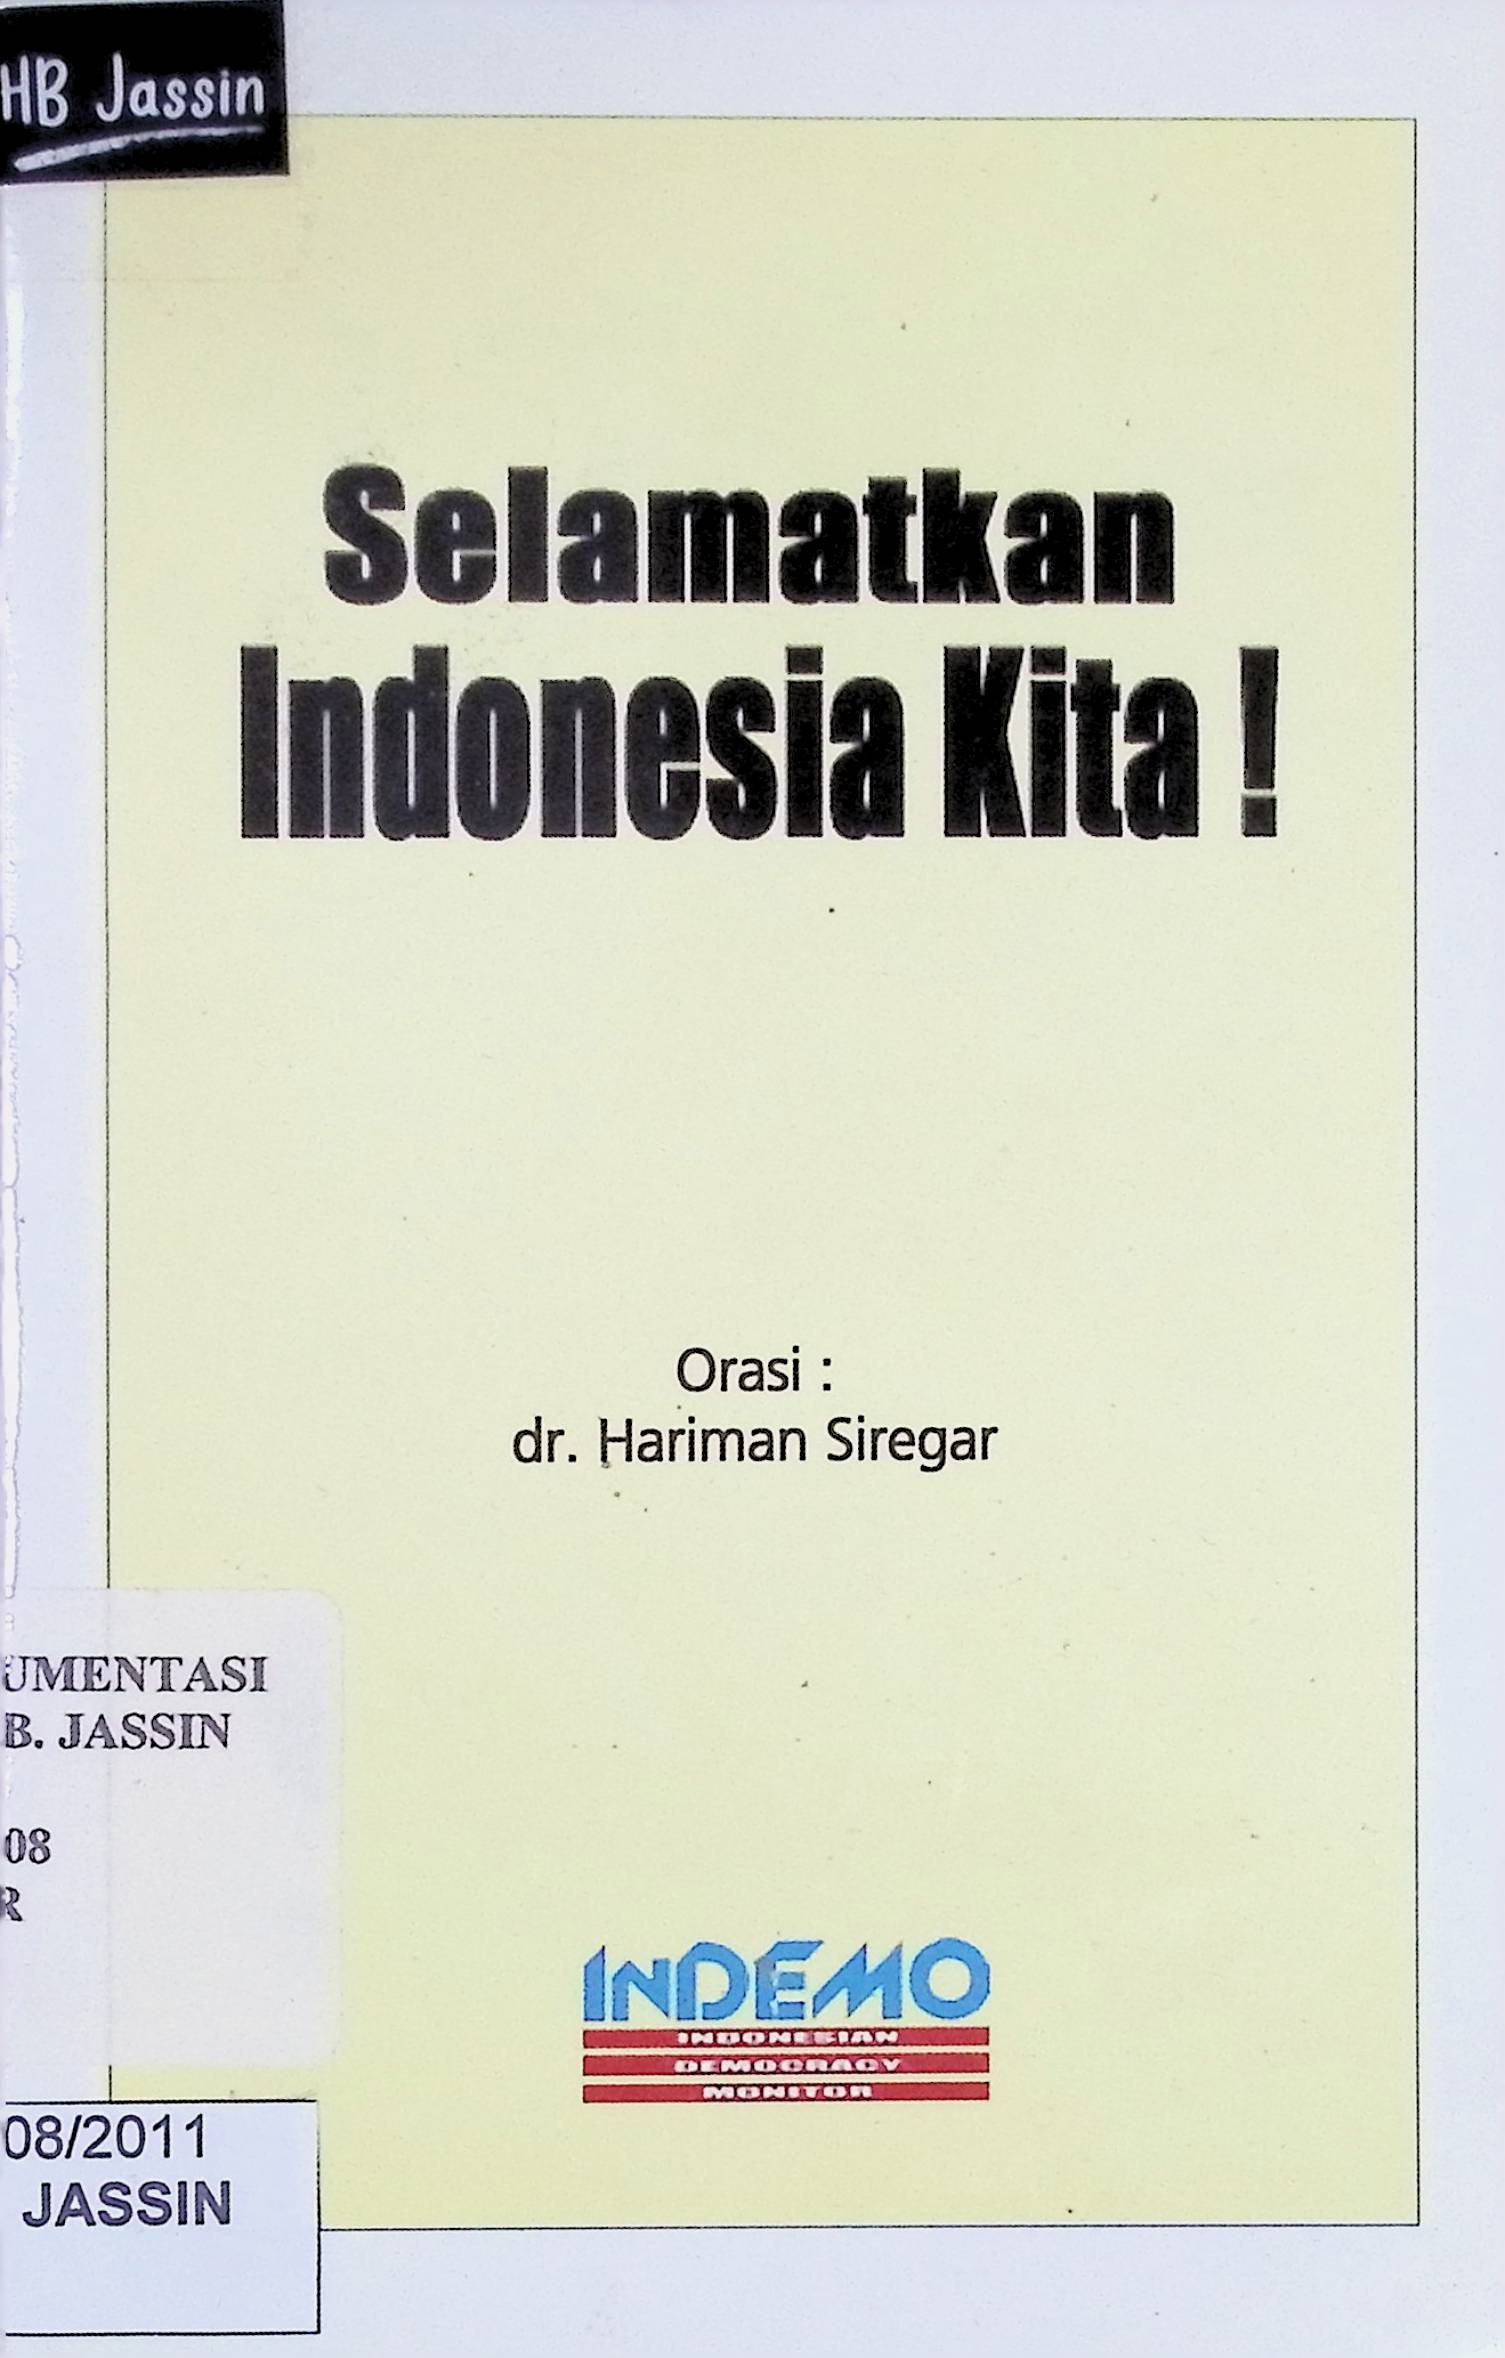 Selamatkan Indonesia kita!